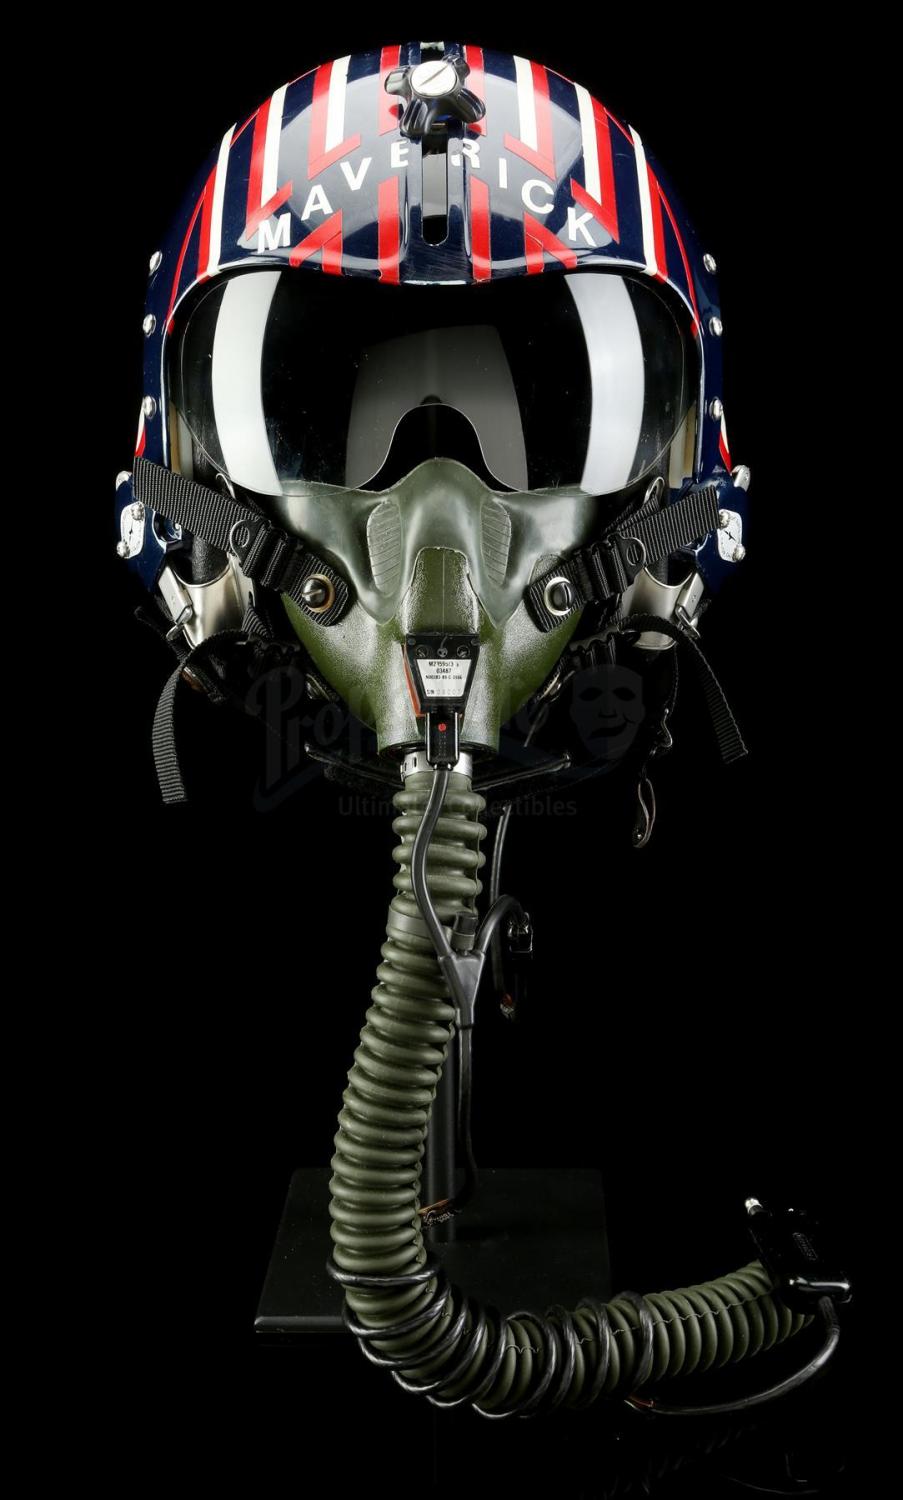 Lot 815 Top Gun 1986 Pete Maverick Mitchell S Tom Cruise Fighter Pilot Helmet Price Estimate